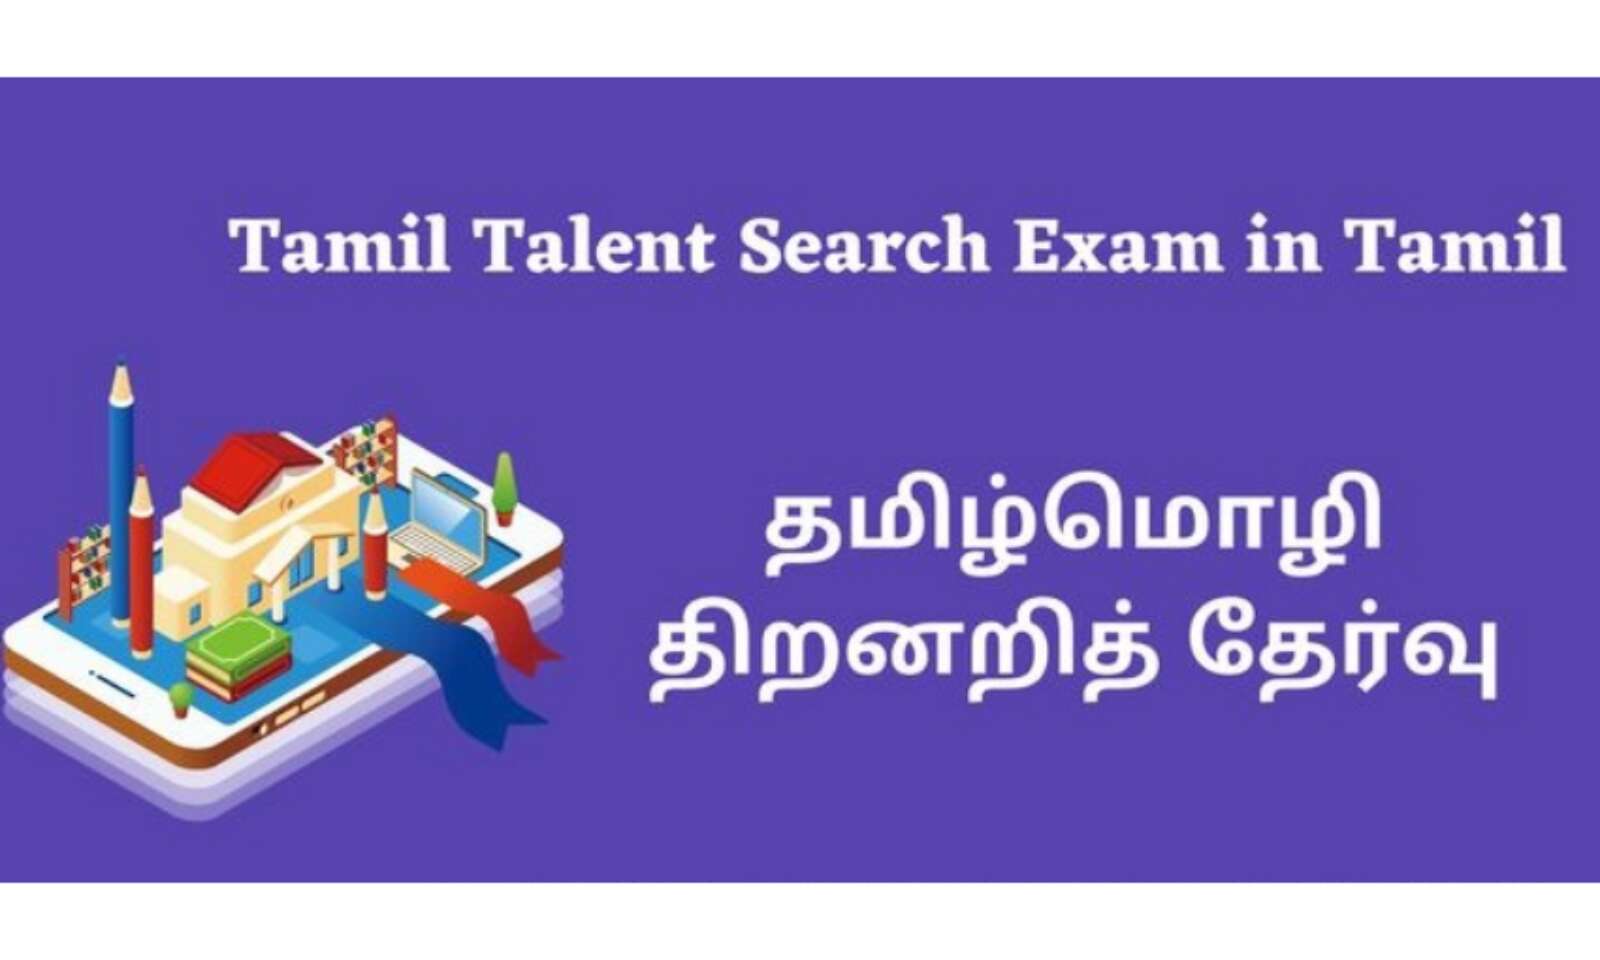 Tamil Talent Search exam for Plus One students, announces collector |  பதினோராம் வகுப்பு மாணவர்களுக்கு தமிழ் திறனறி தேர்வு